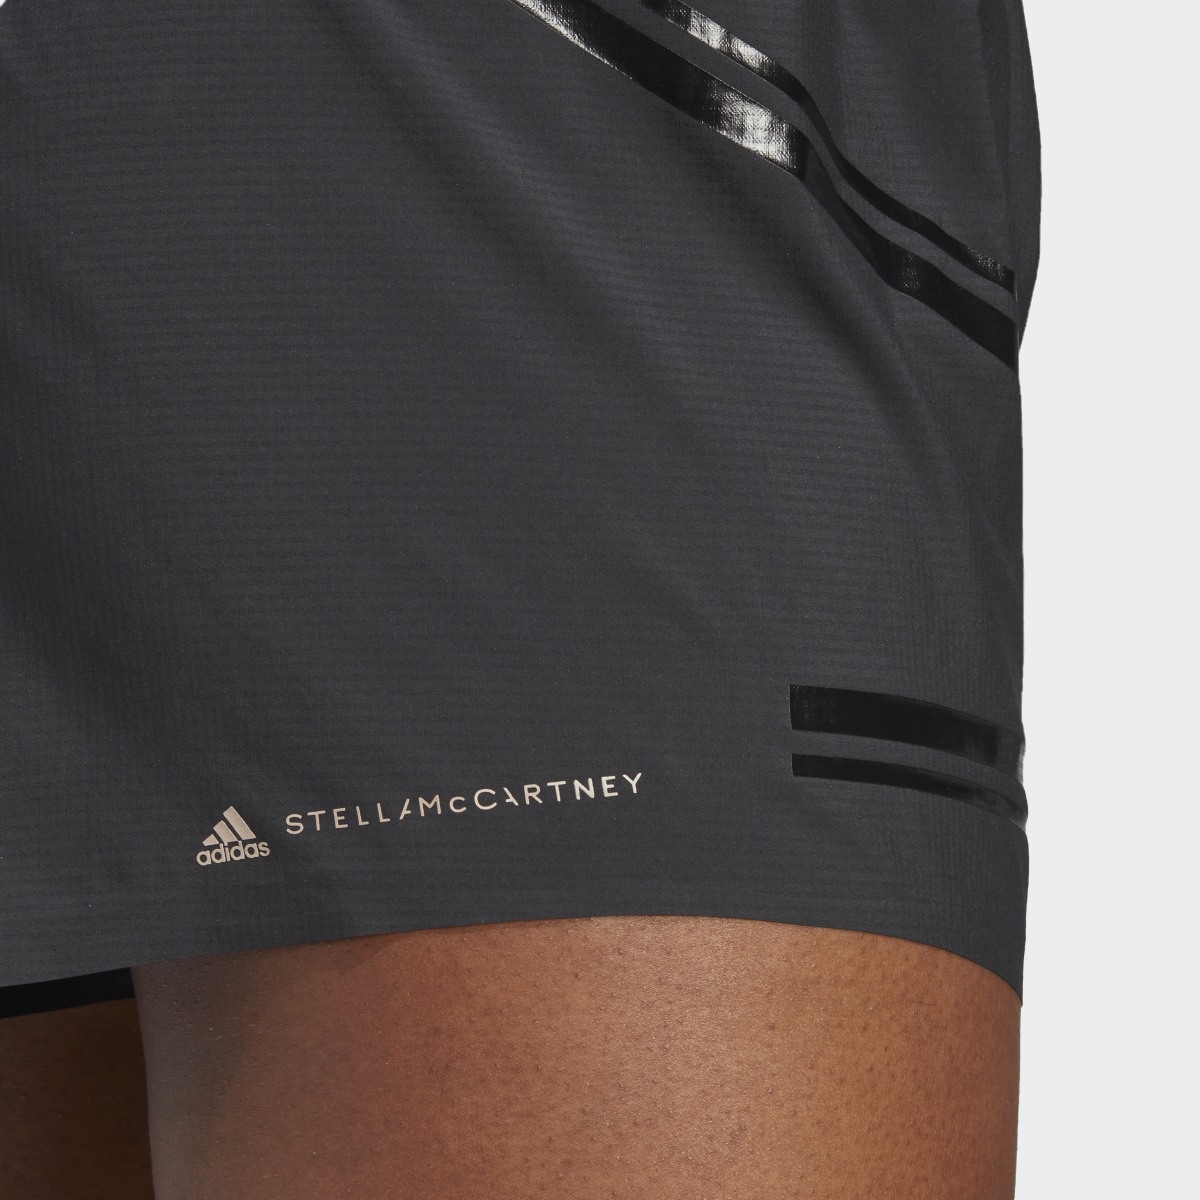 Adidas by Stella McCartney TruePace Running Shorts. 7